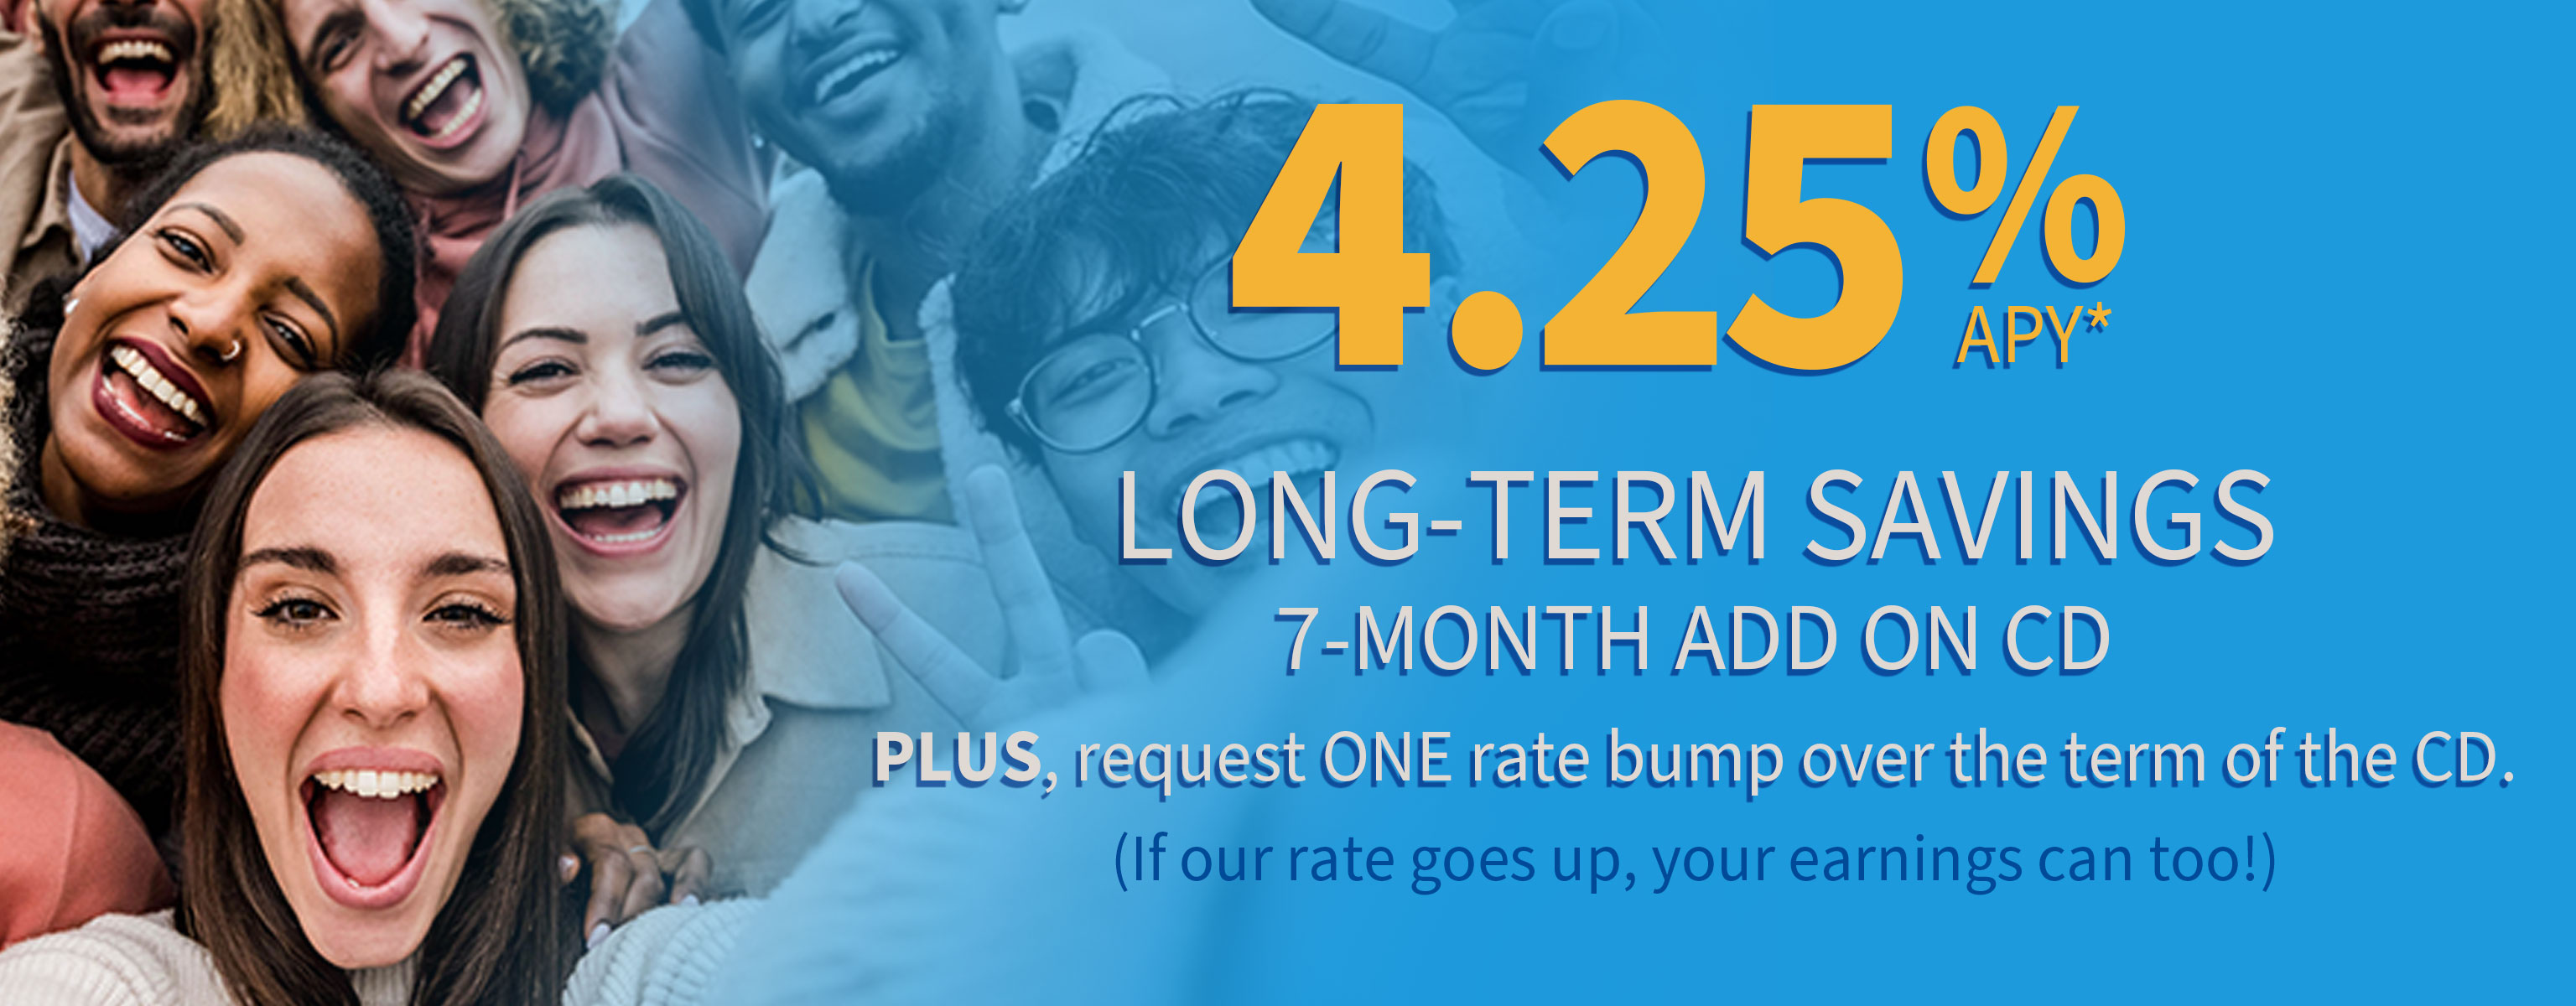 7Month Long-Term Savings Add-On CD - 4.25% APY*